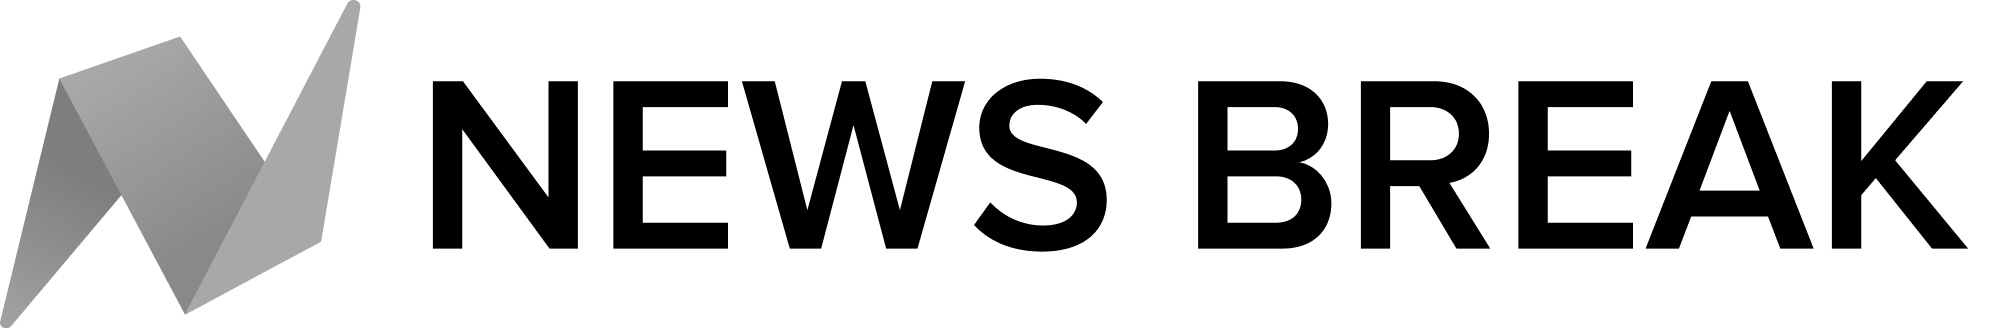 Newsbreak-ONA20-Logo-9-17.png